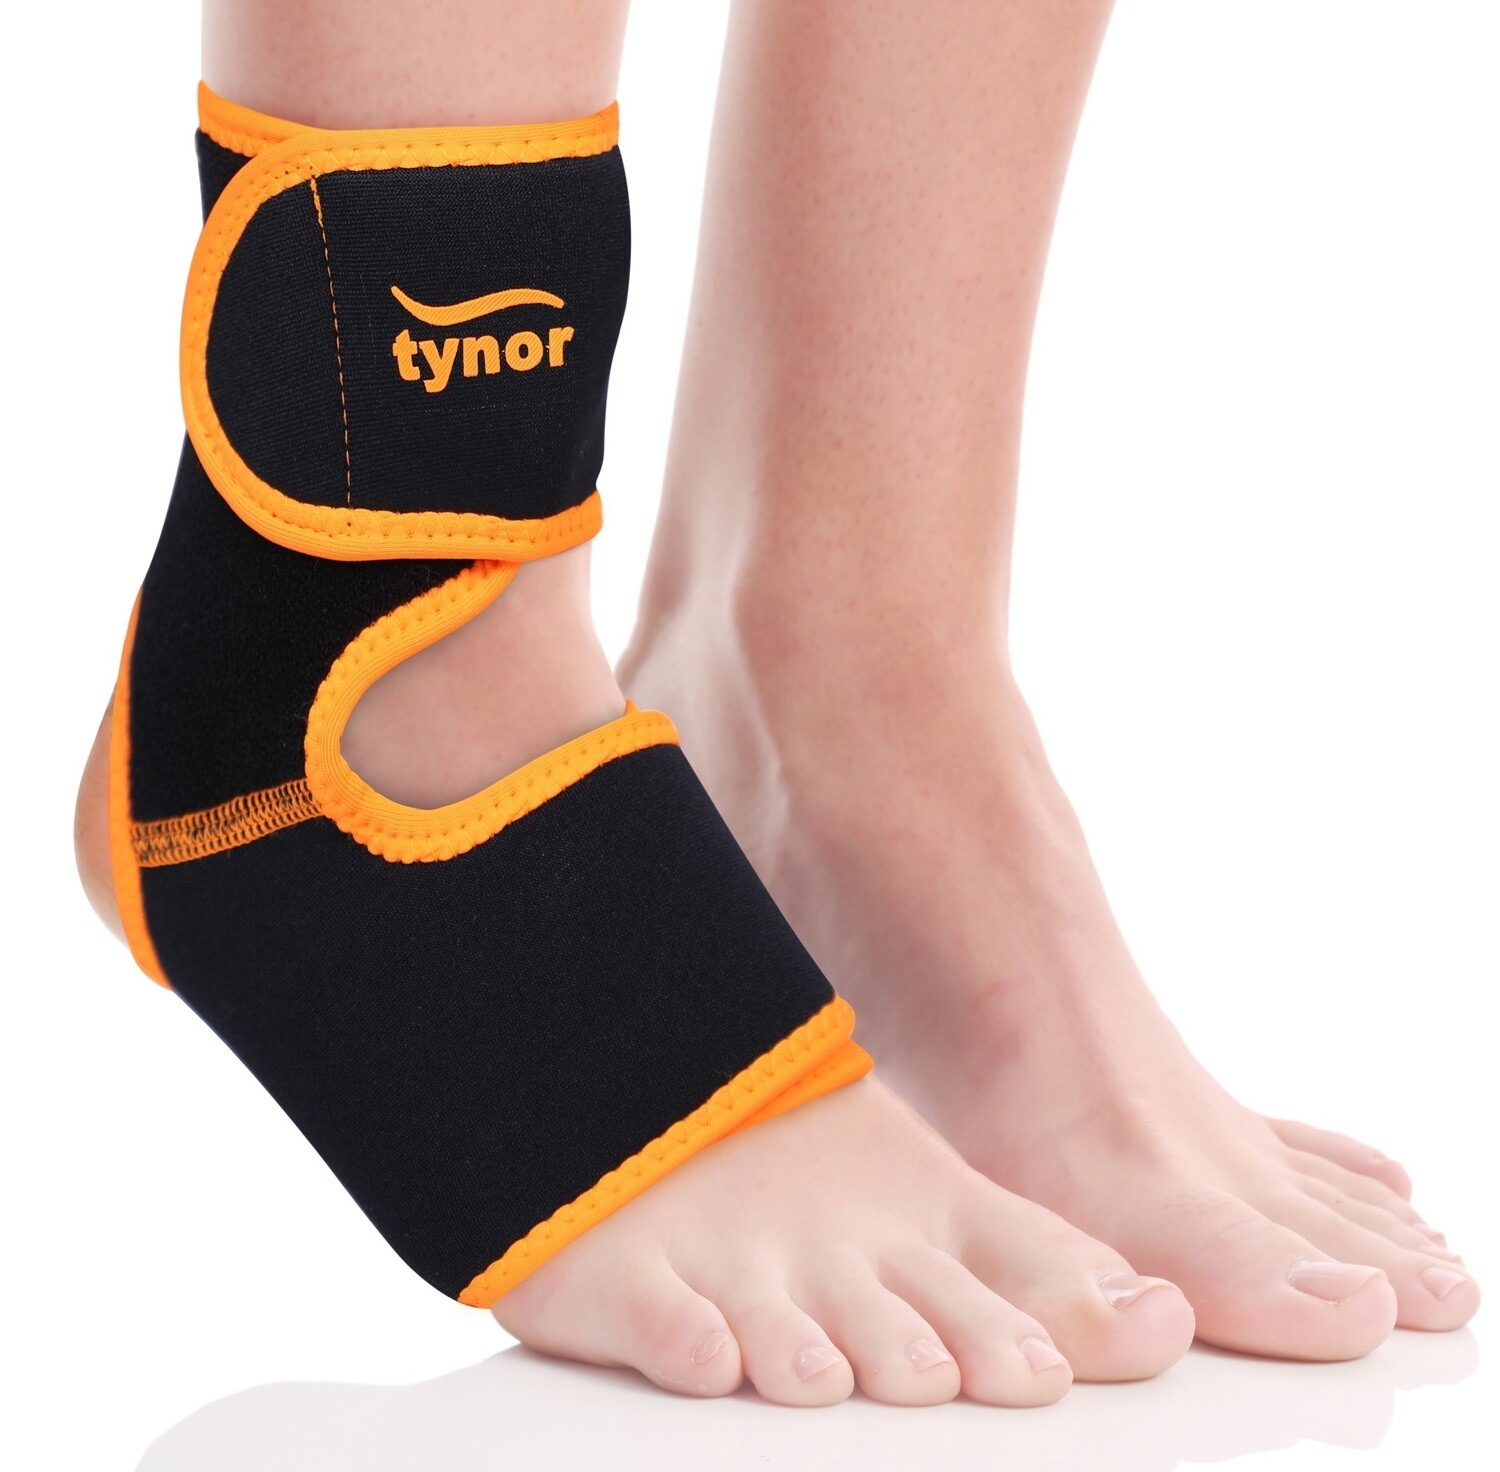 Tynor Ankle Support (Neo), Black & Orange, Universal, 1 Unit